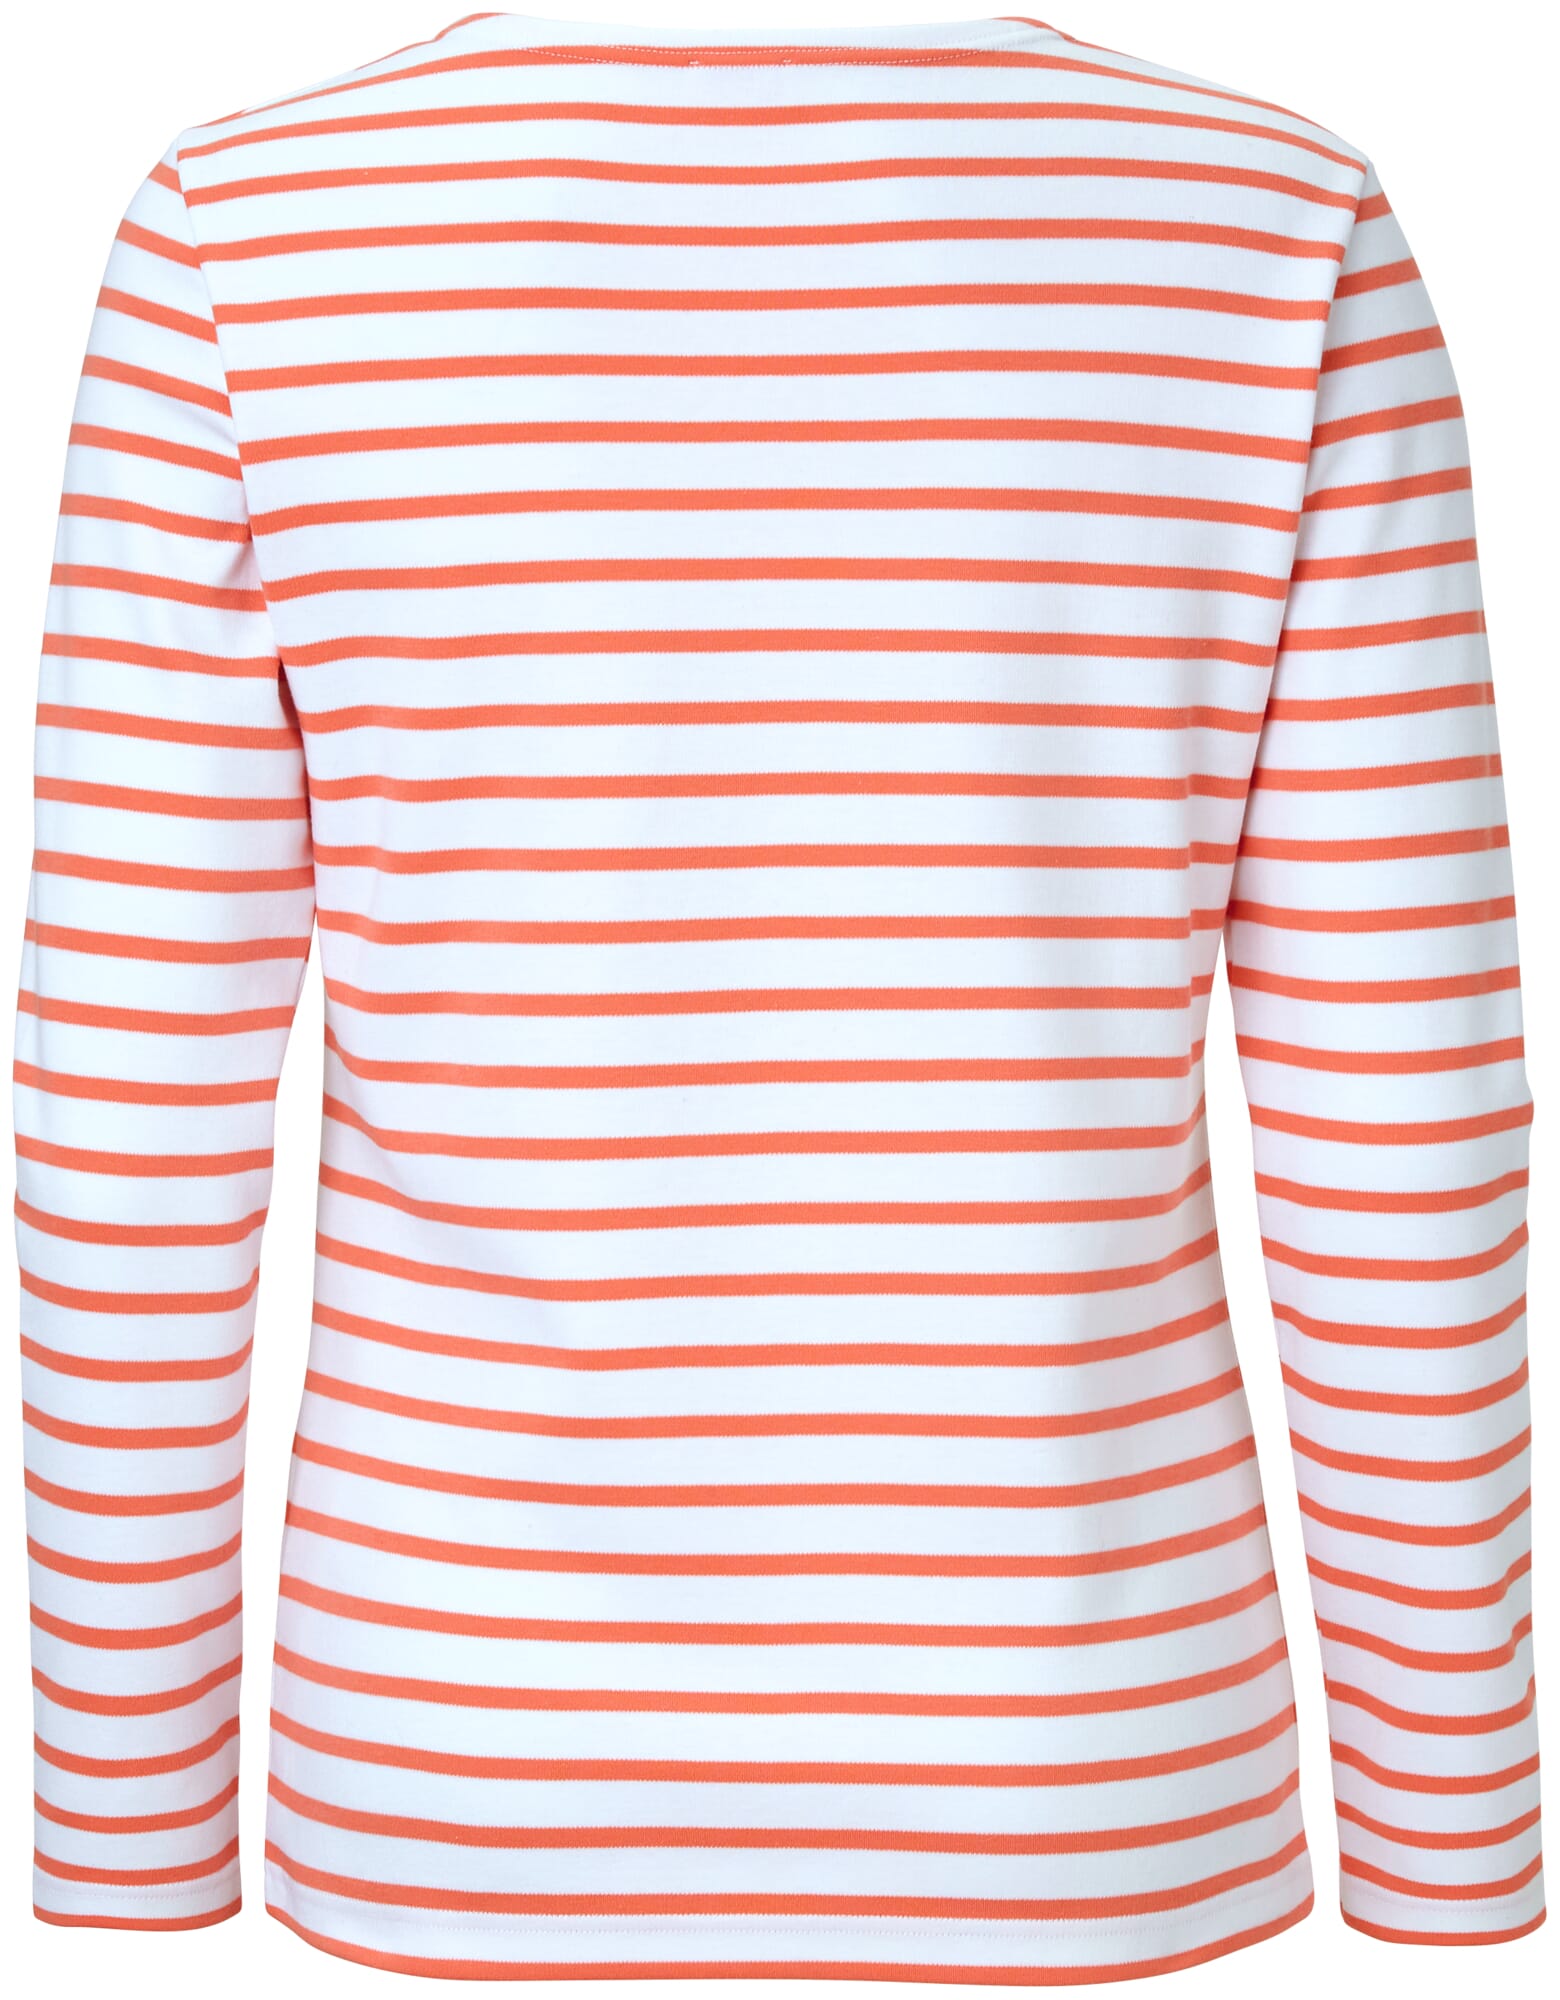 Damen-Ringelshirt, Weiß-Orange | Manufactum